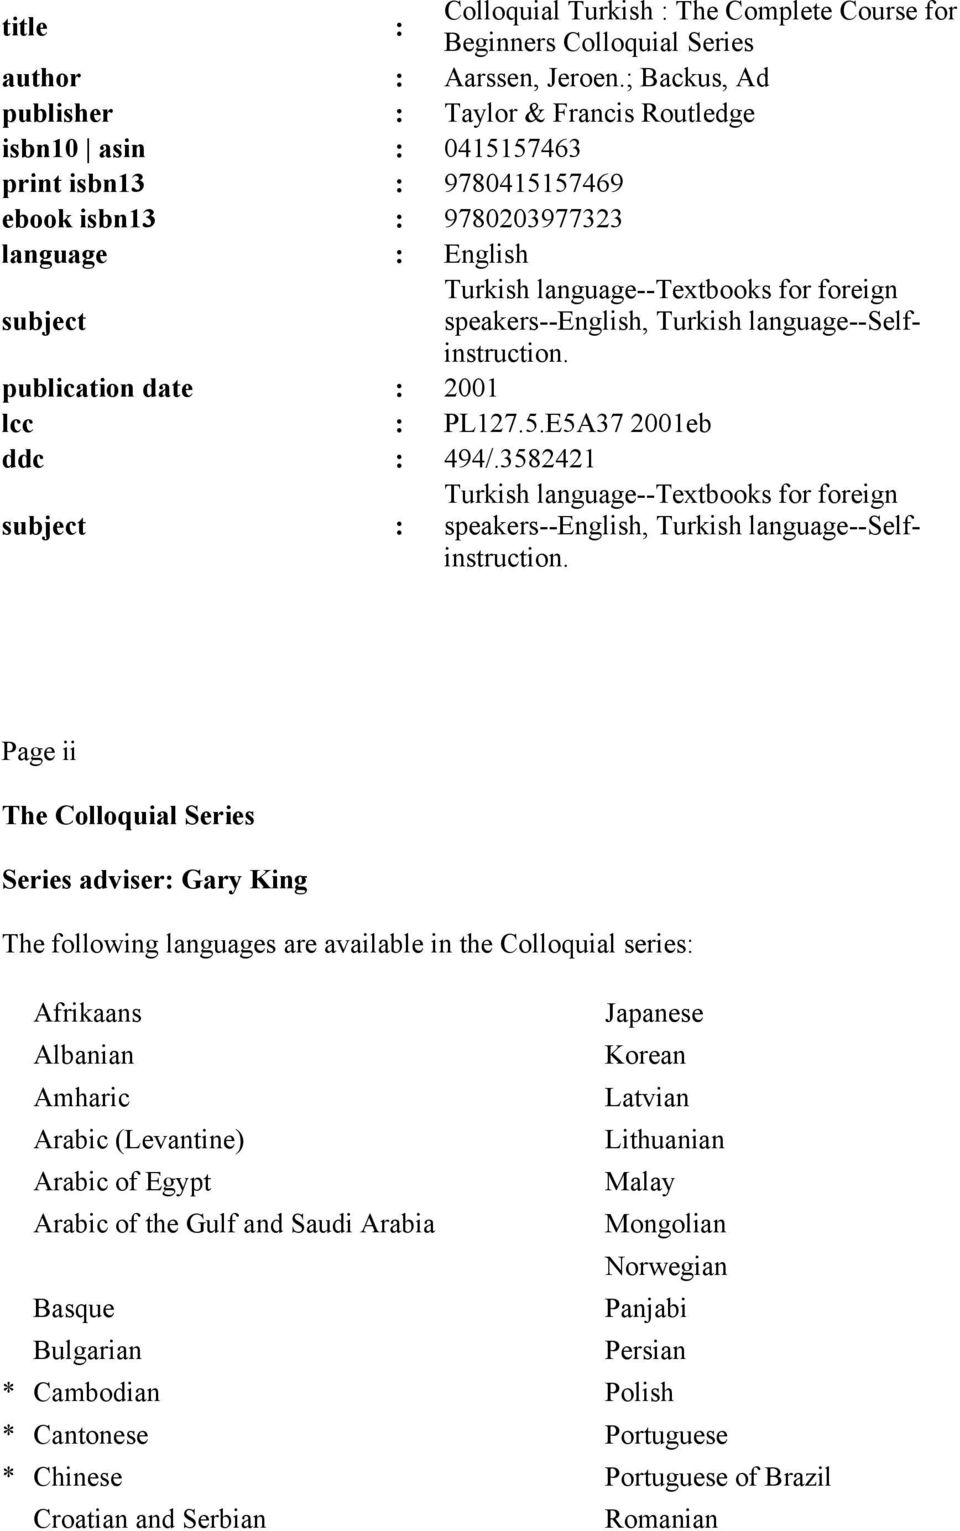 foreign speakers--english, Turkish language--selfinstruction. publication date : 2001 lcc : PL127.5.E5A37 2001eb ddc : 494/.